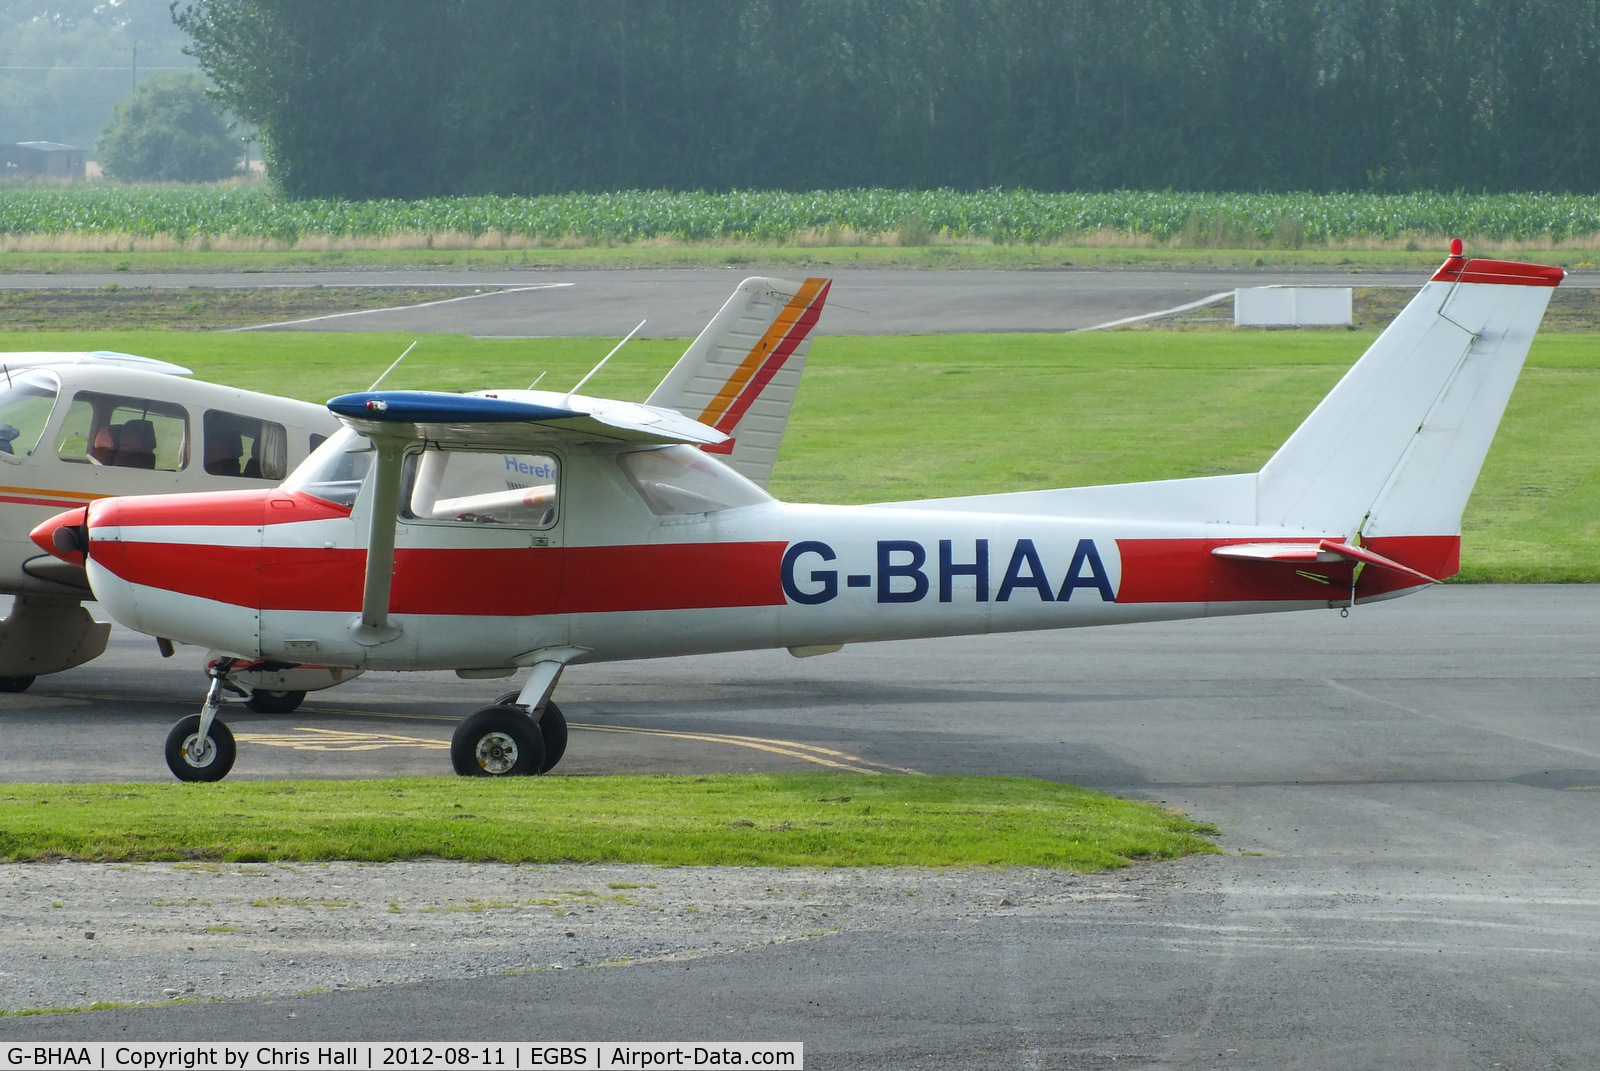 G-BHAA, 1978 Cessna 152 C/N 15281330, at Shobdon Airfield, Herefordshire